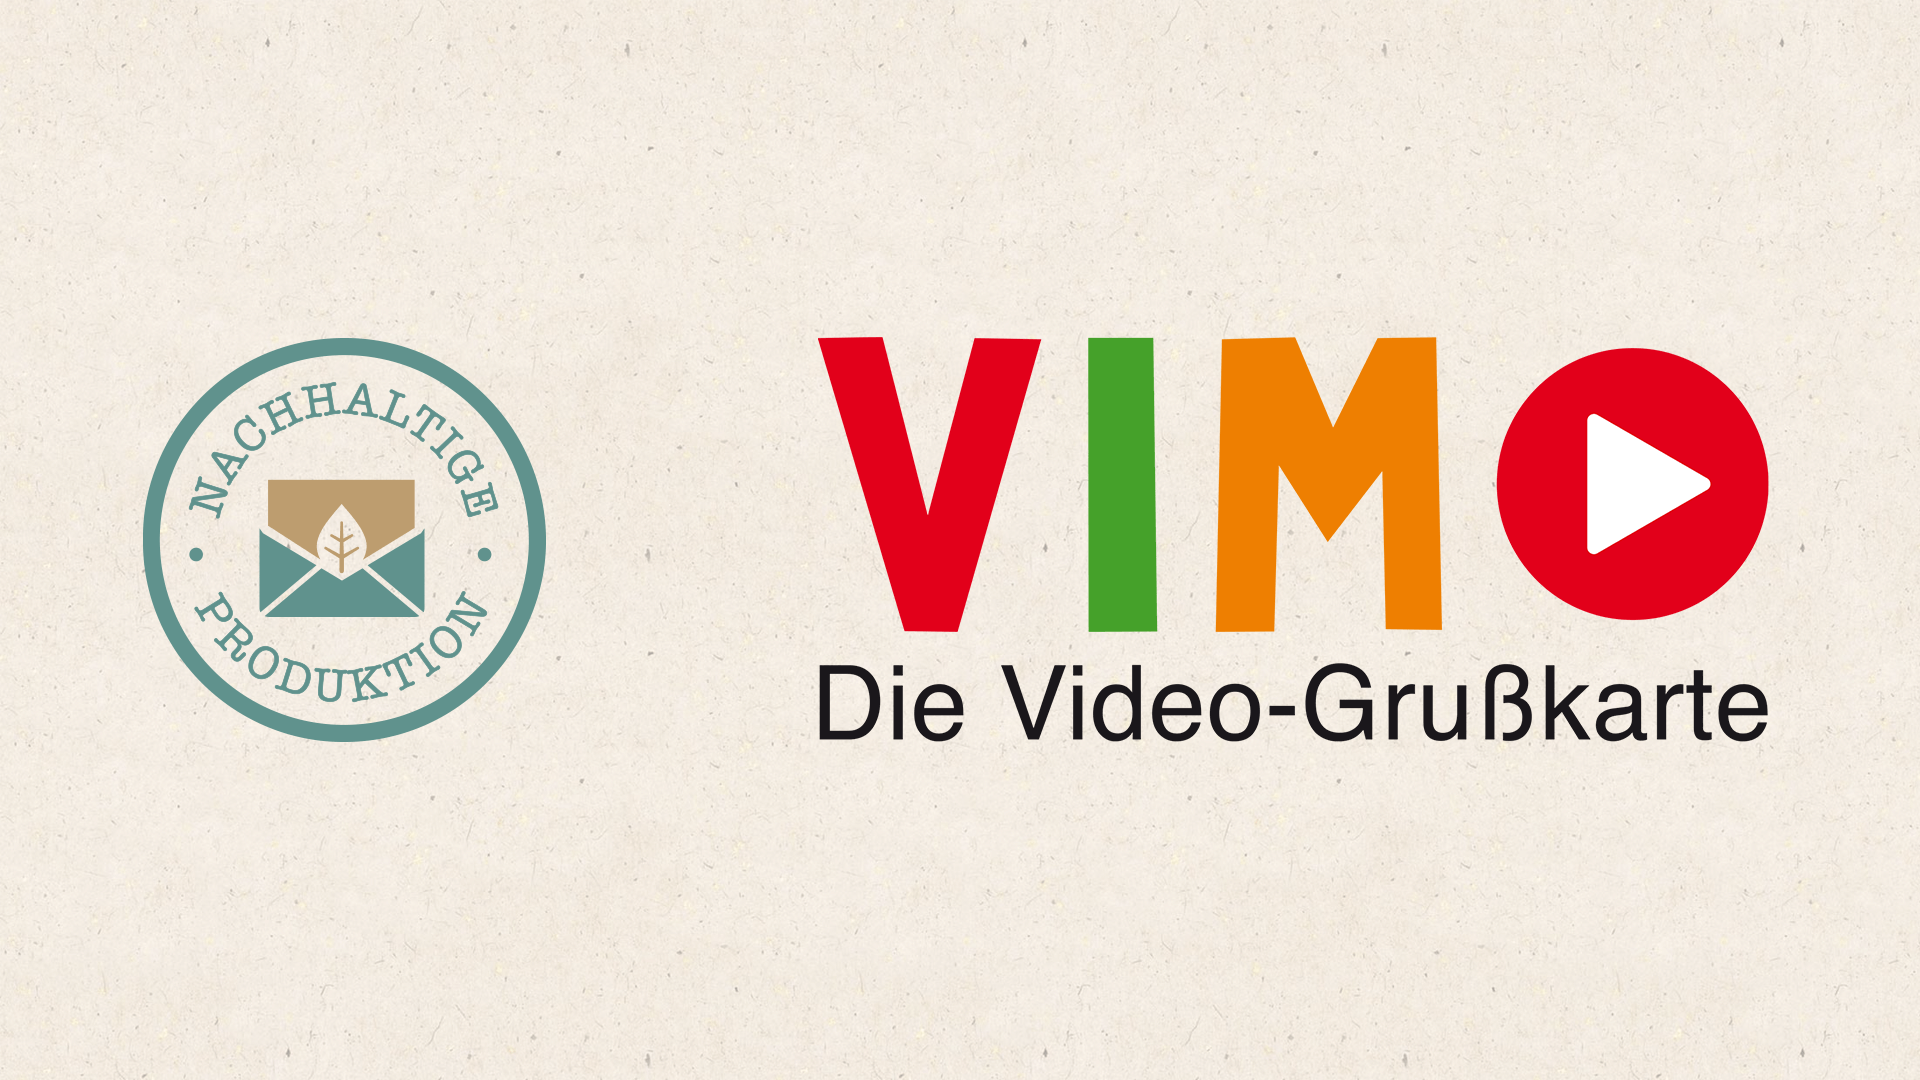 VIMO Videogrusskarte